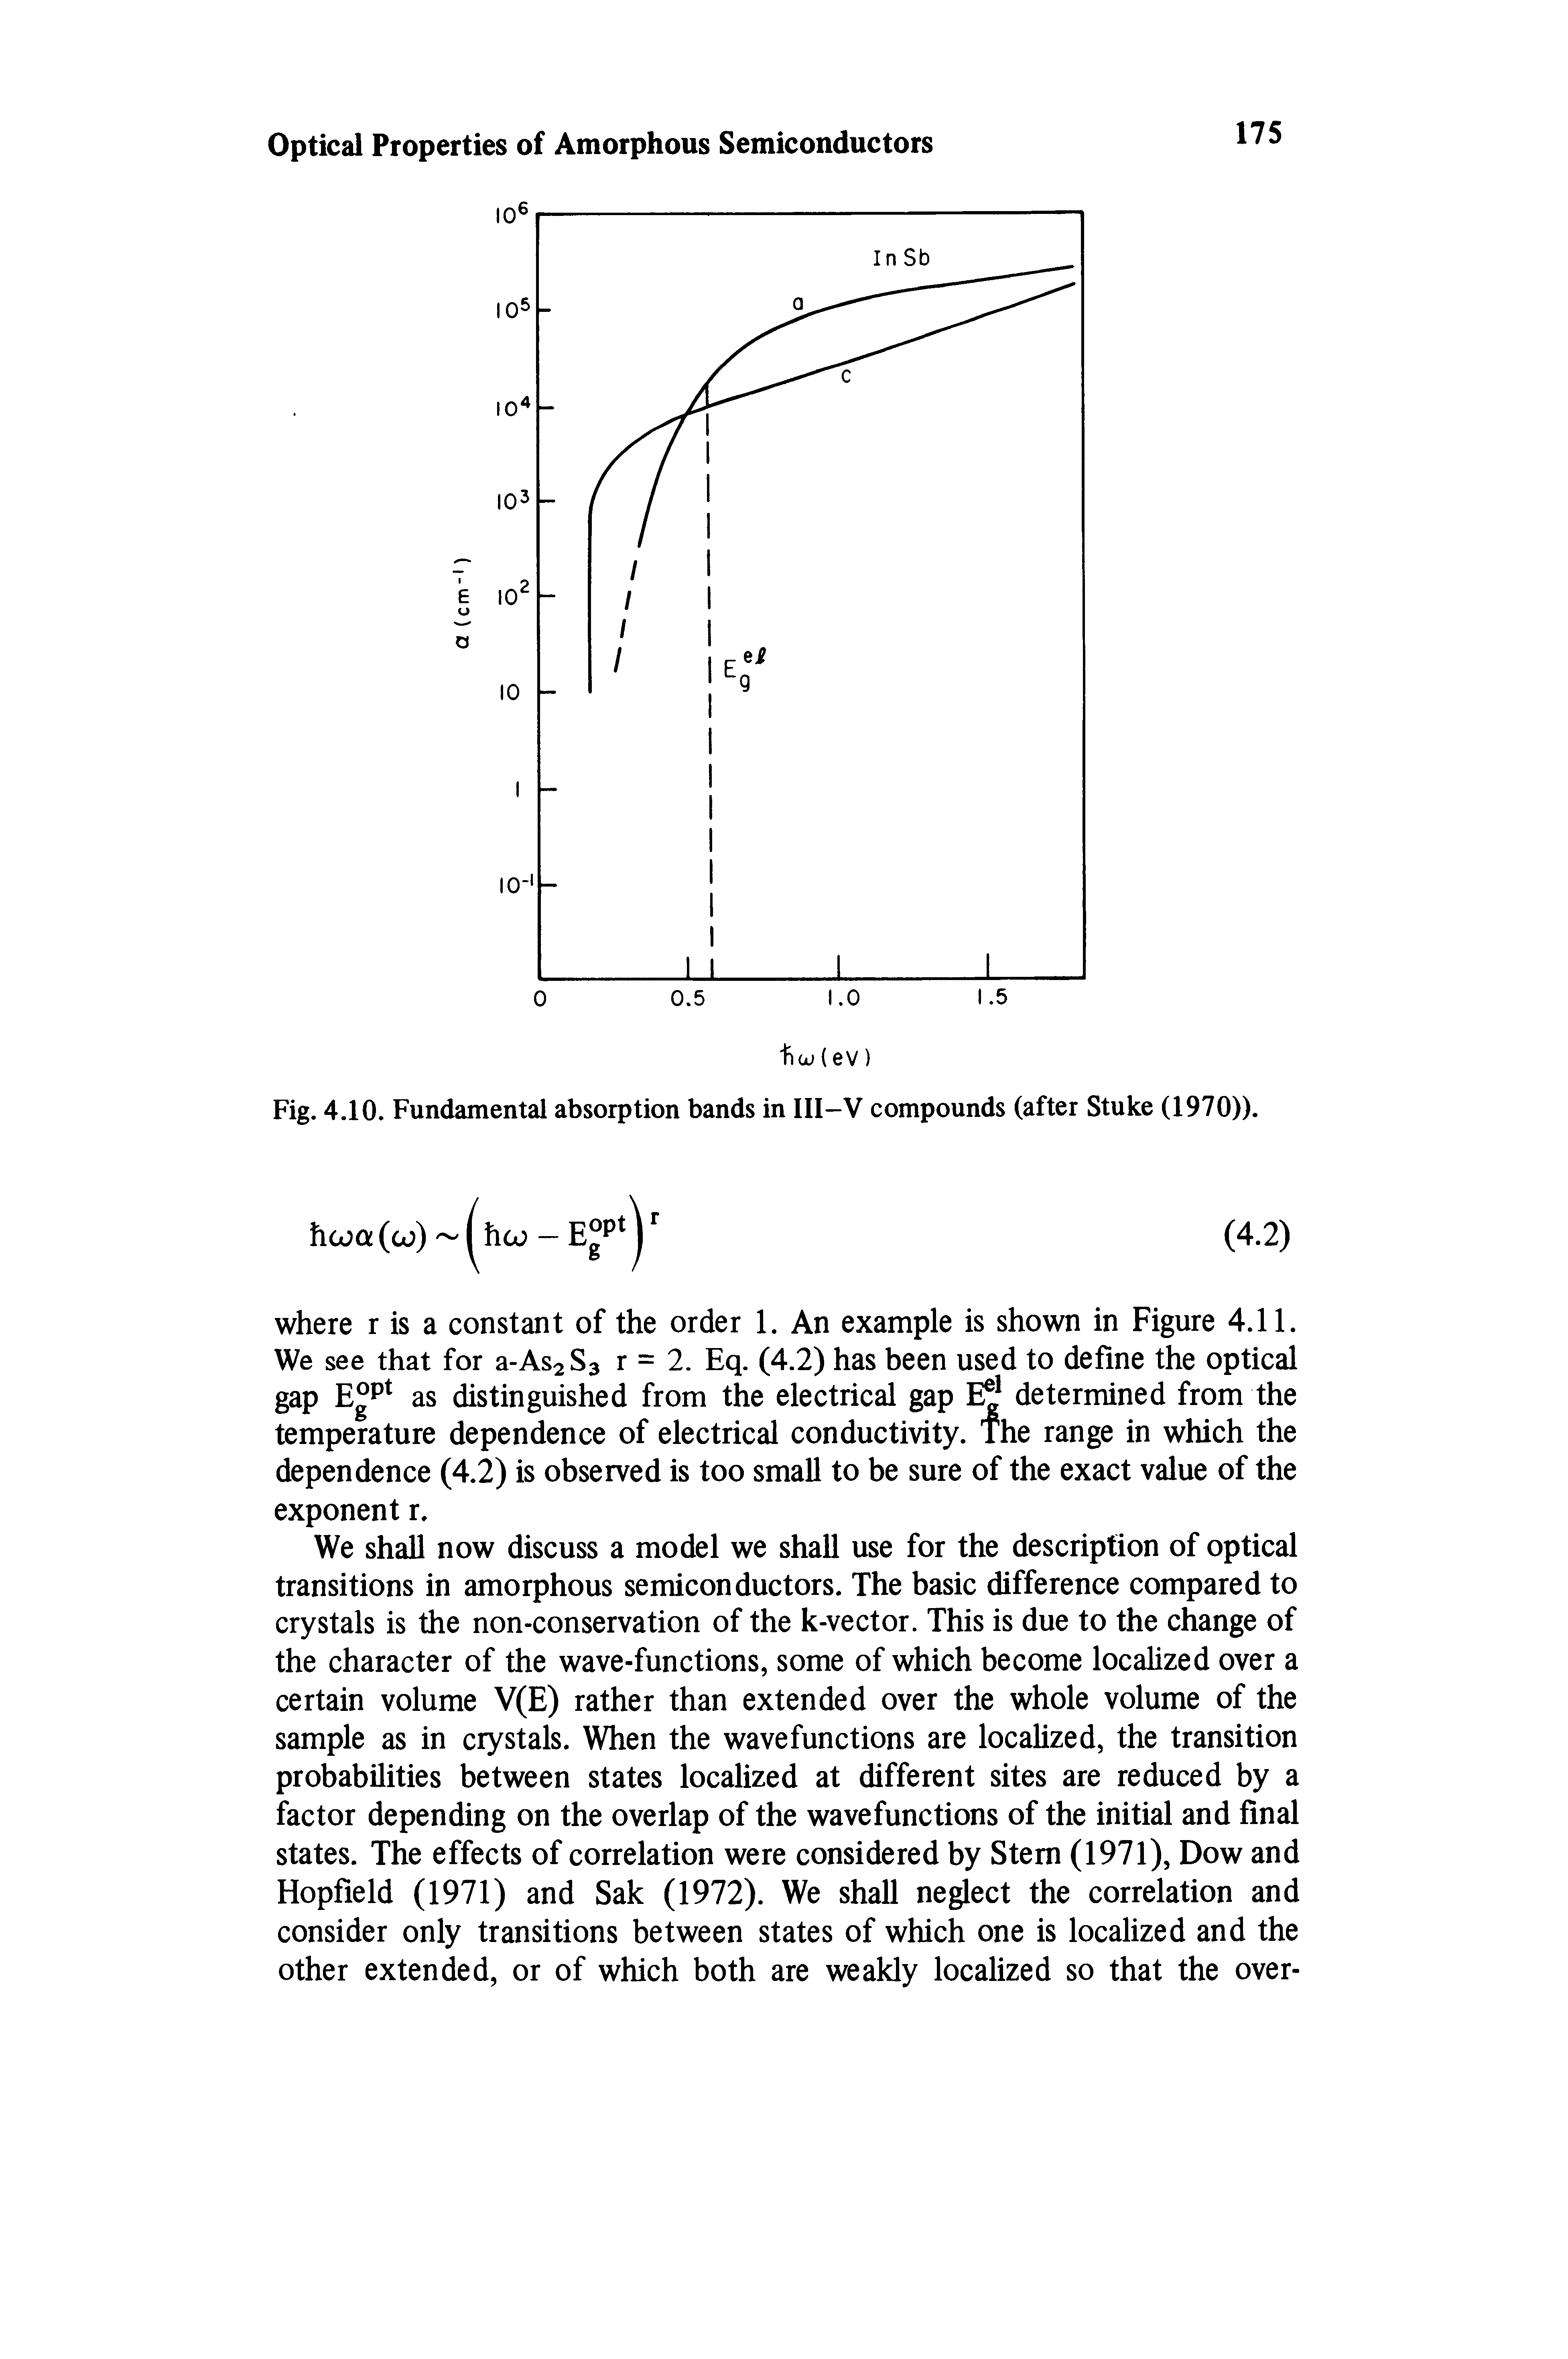 Fig. 4.10. Fundamental absorption bands in III-V compounds (after Stuke (1970)).